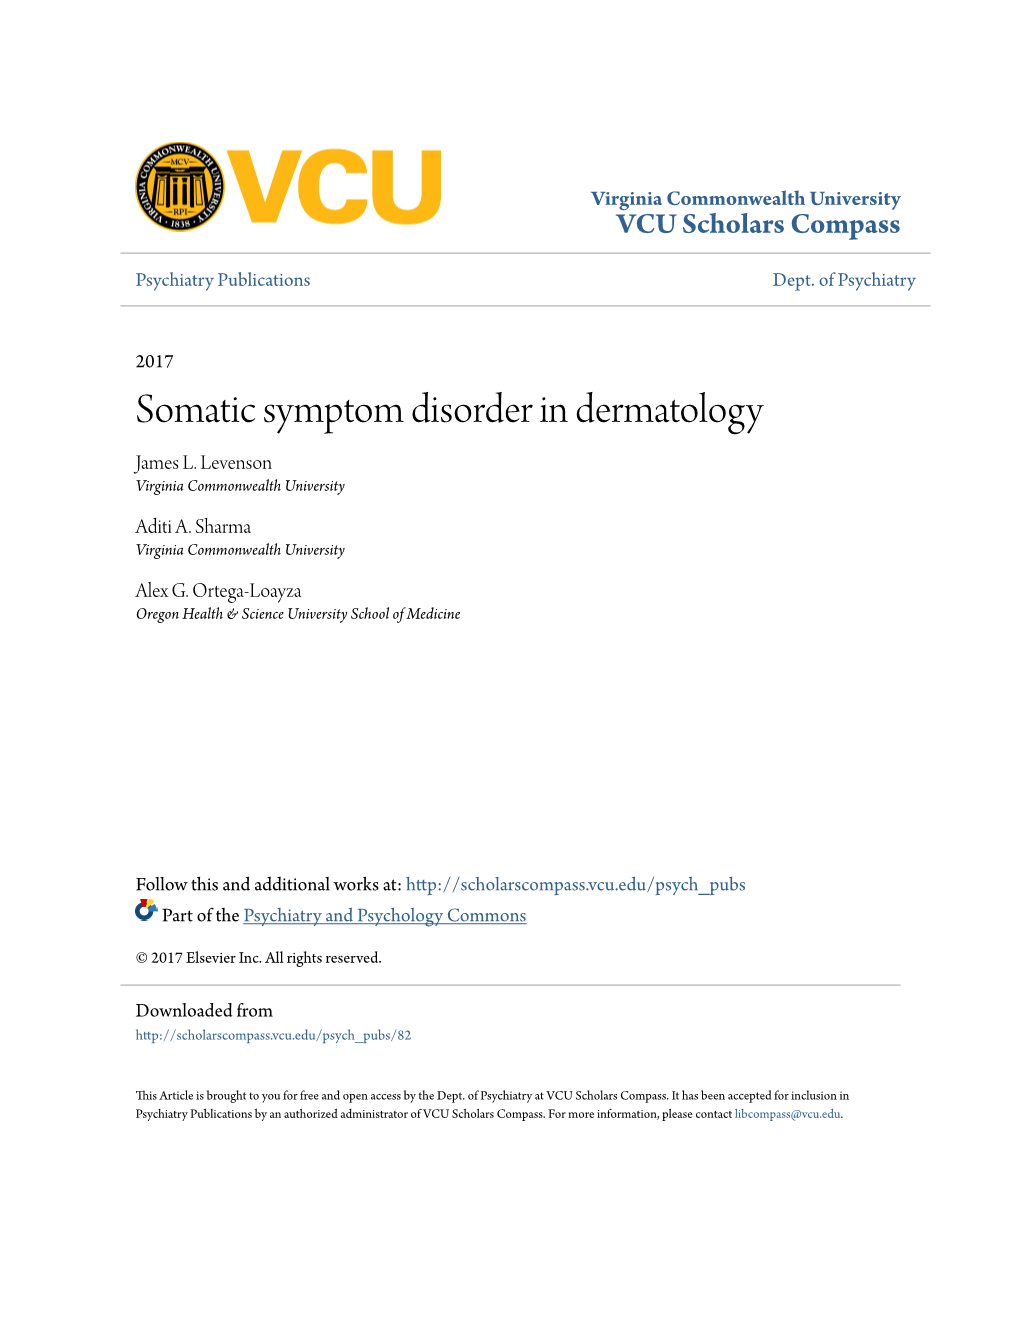 Somatic Symptom Disorder in Dermatology James L